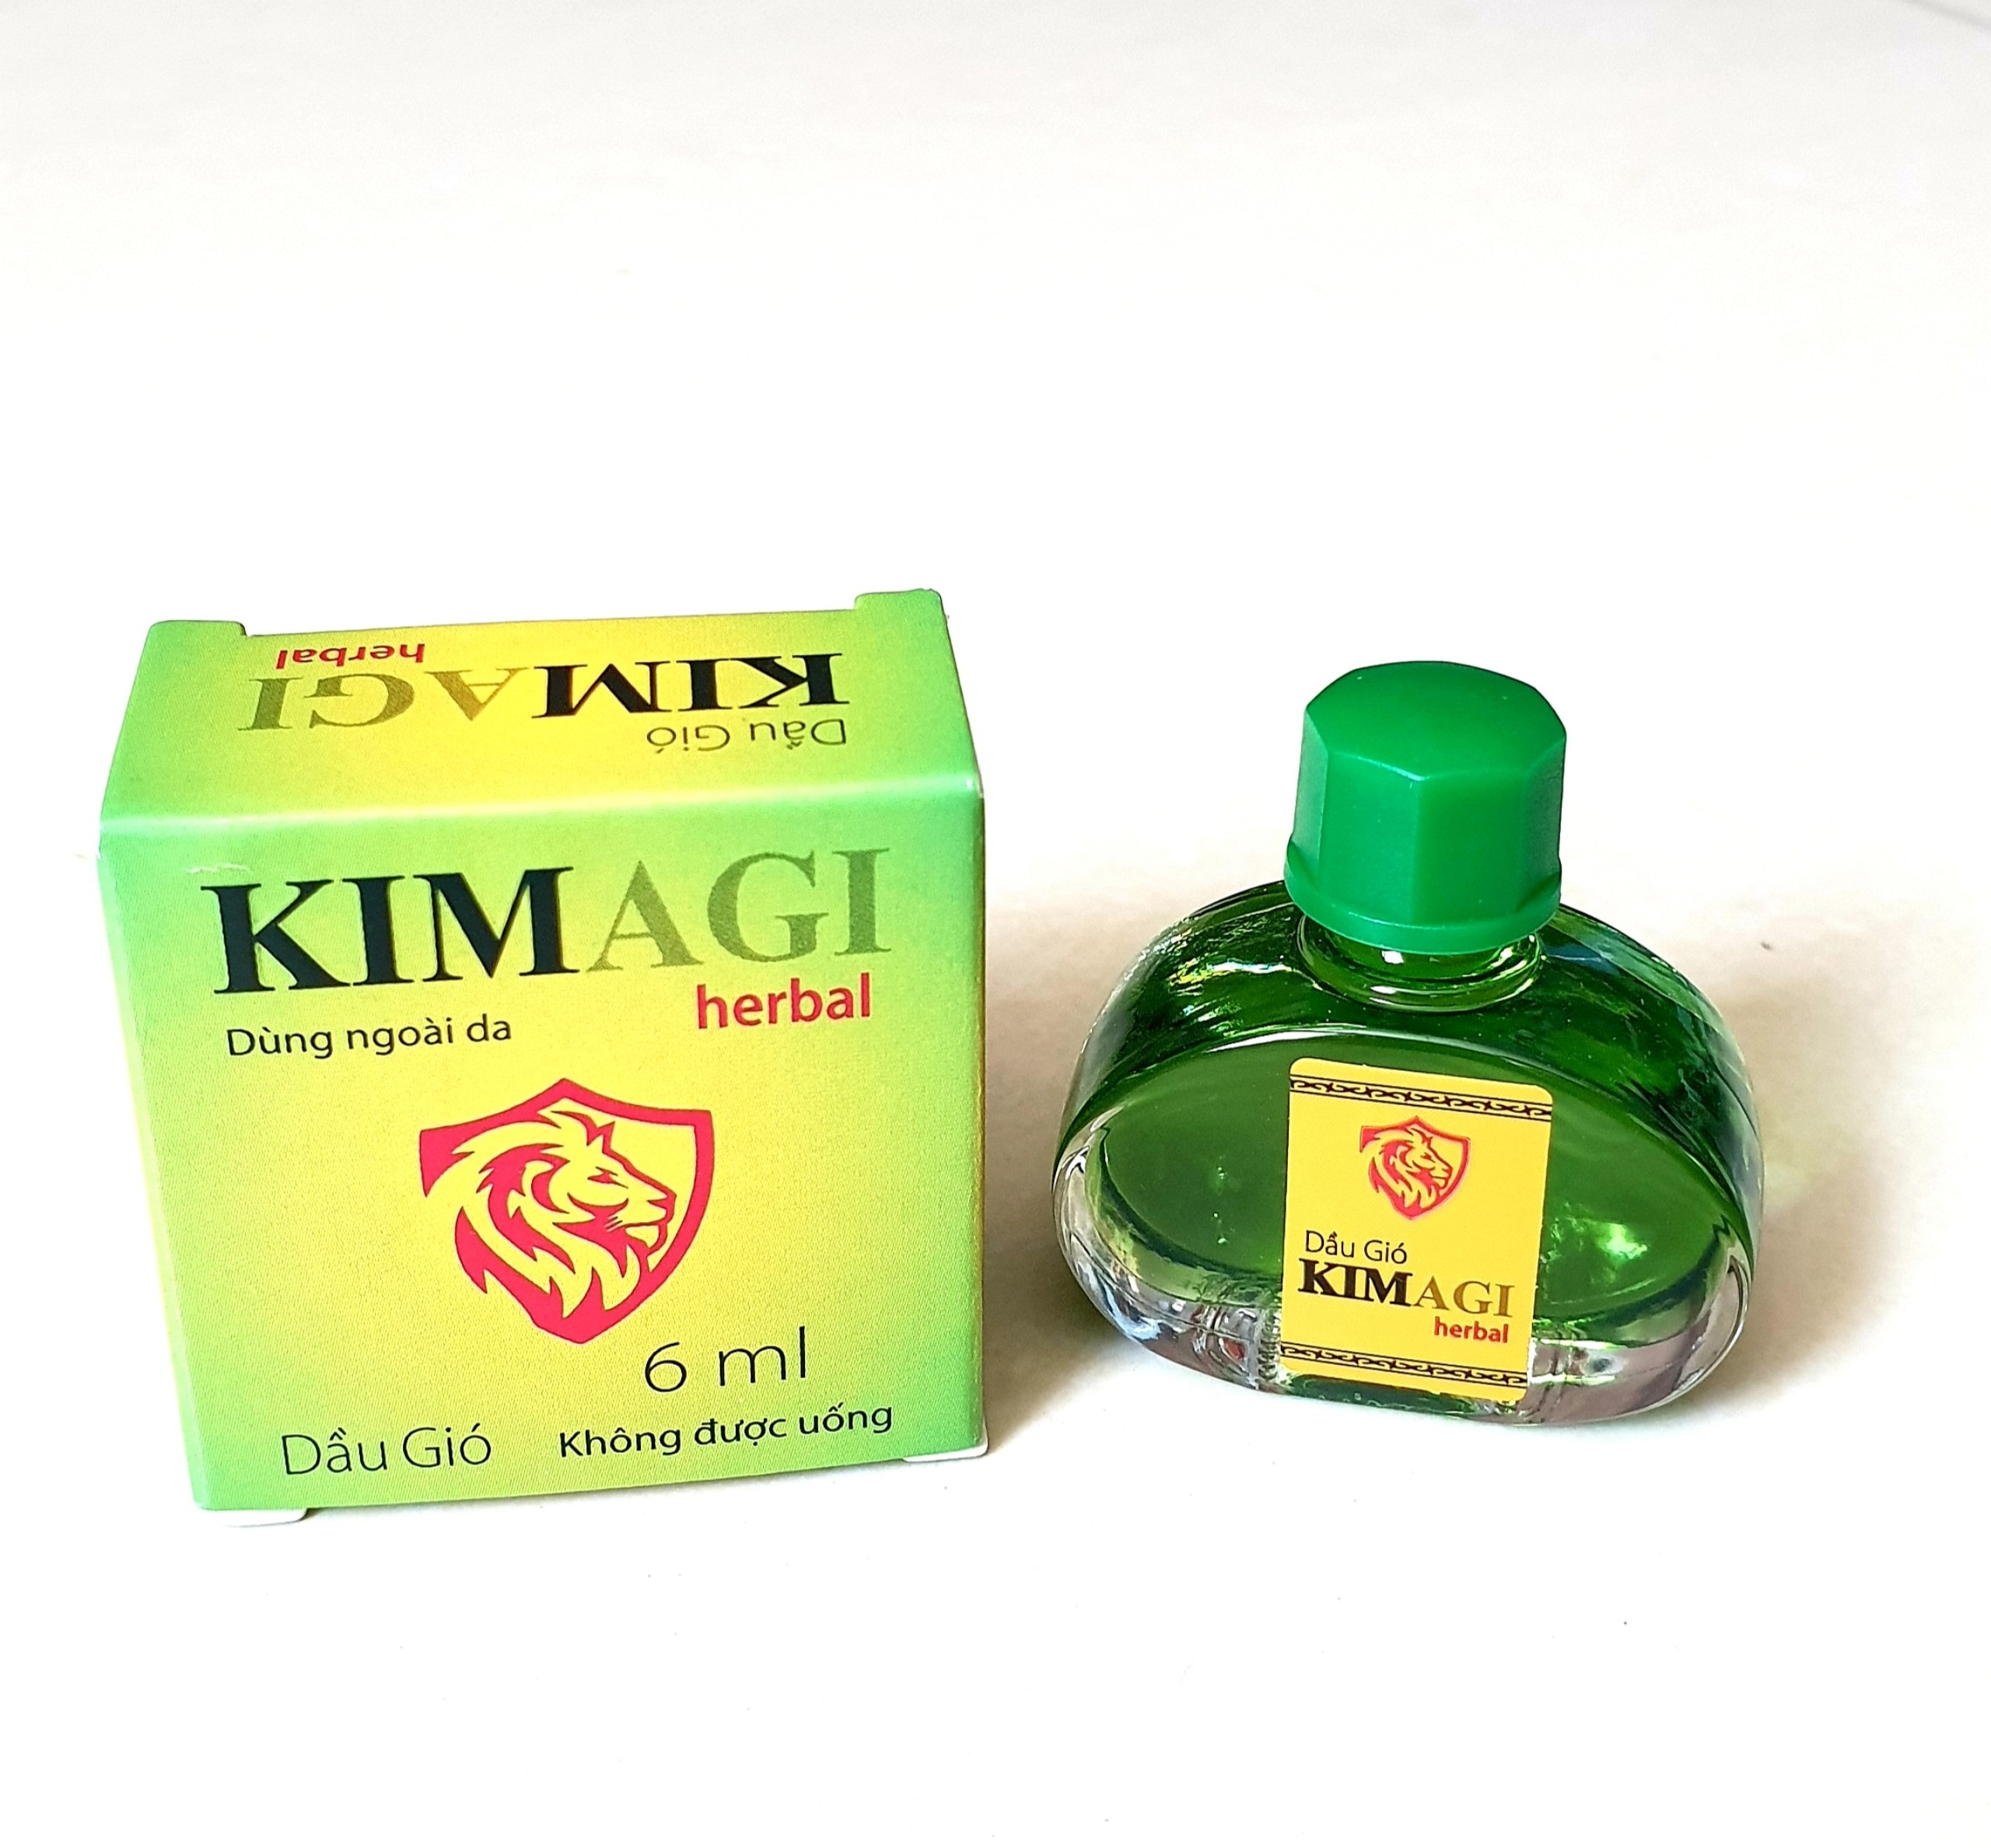 HCMDầu gió KIMAGI herbal - Sản phẩm của cty dược Agimexpharm